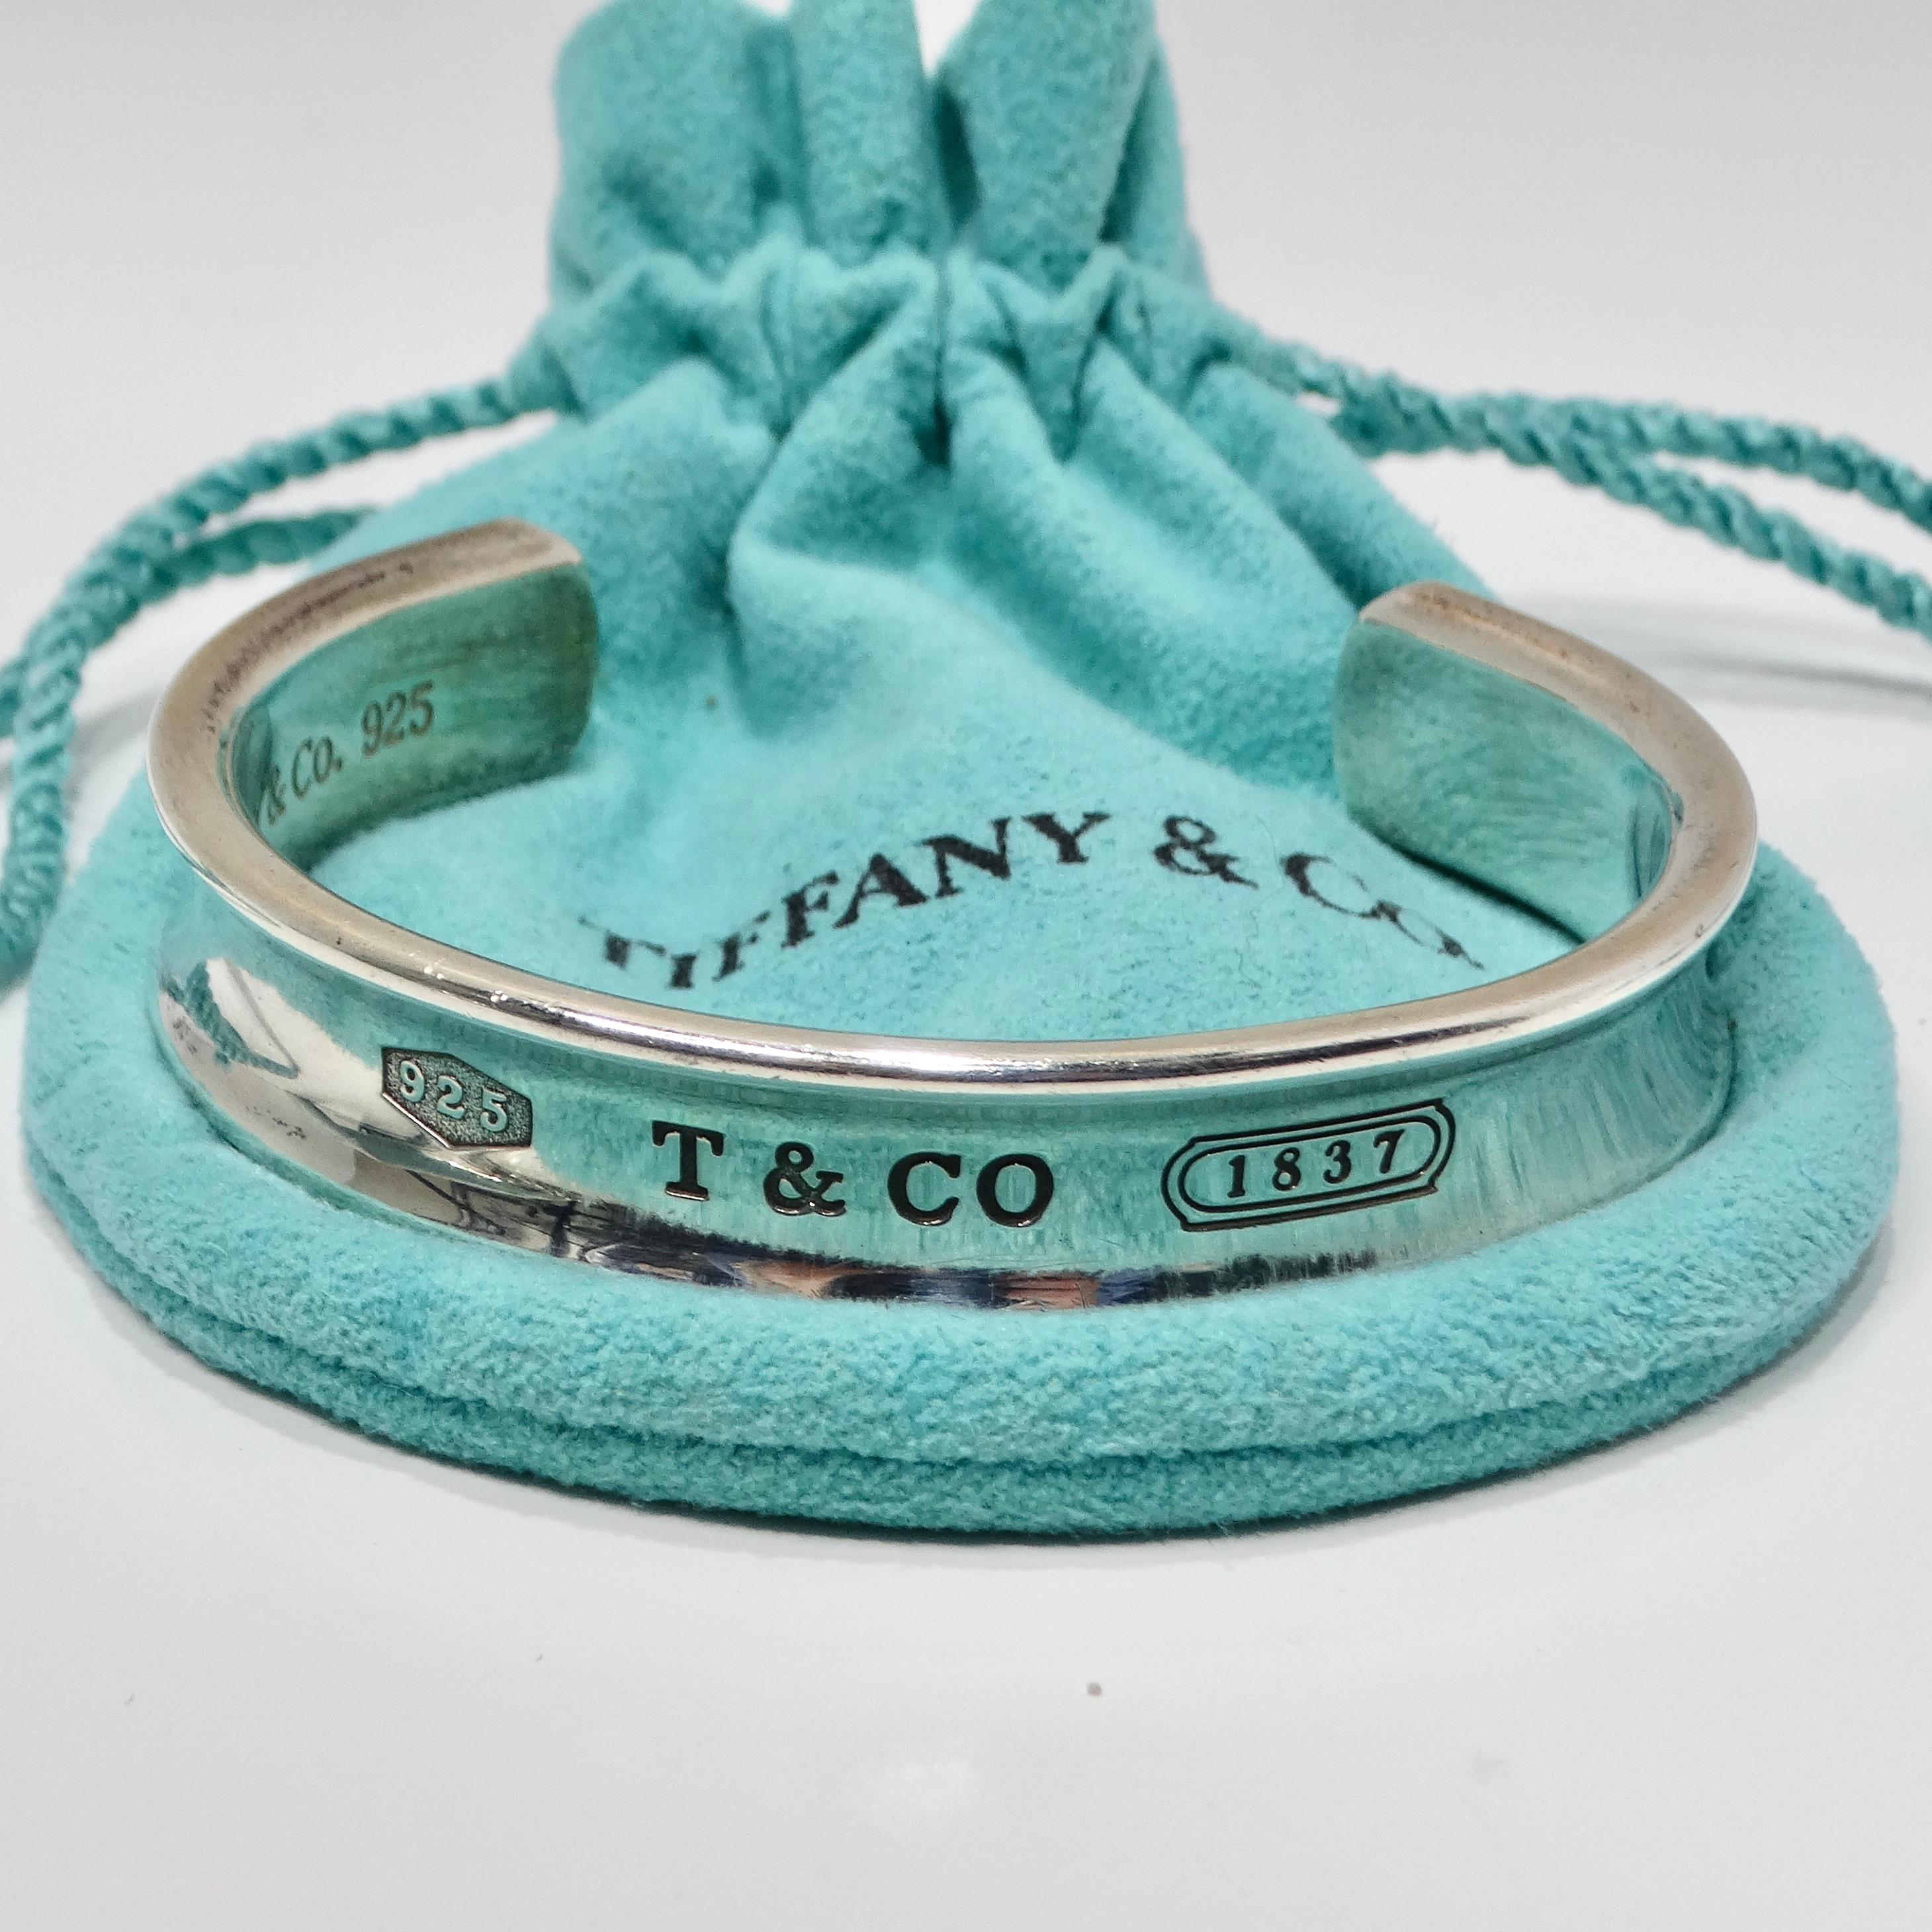 1997 tiffany & co. 925 bracelet